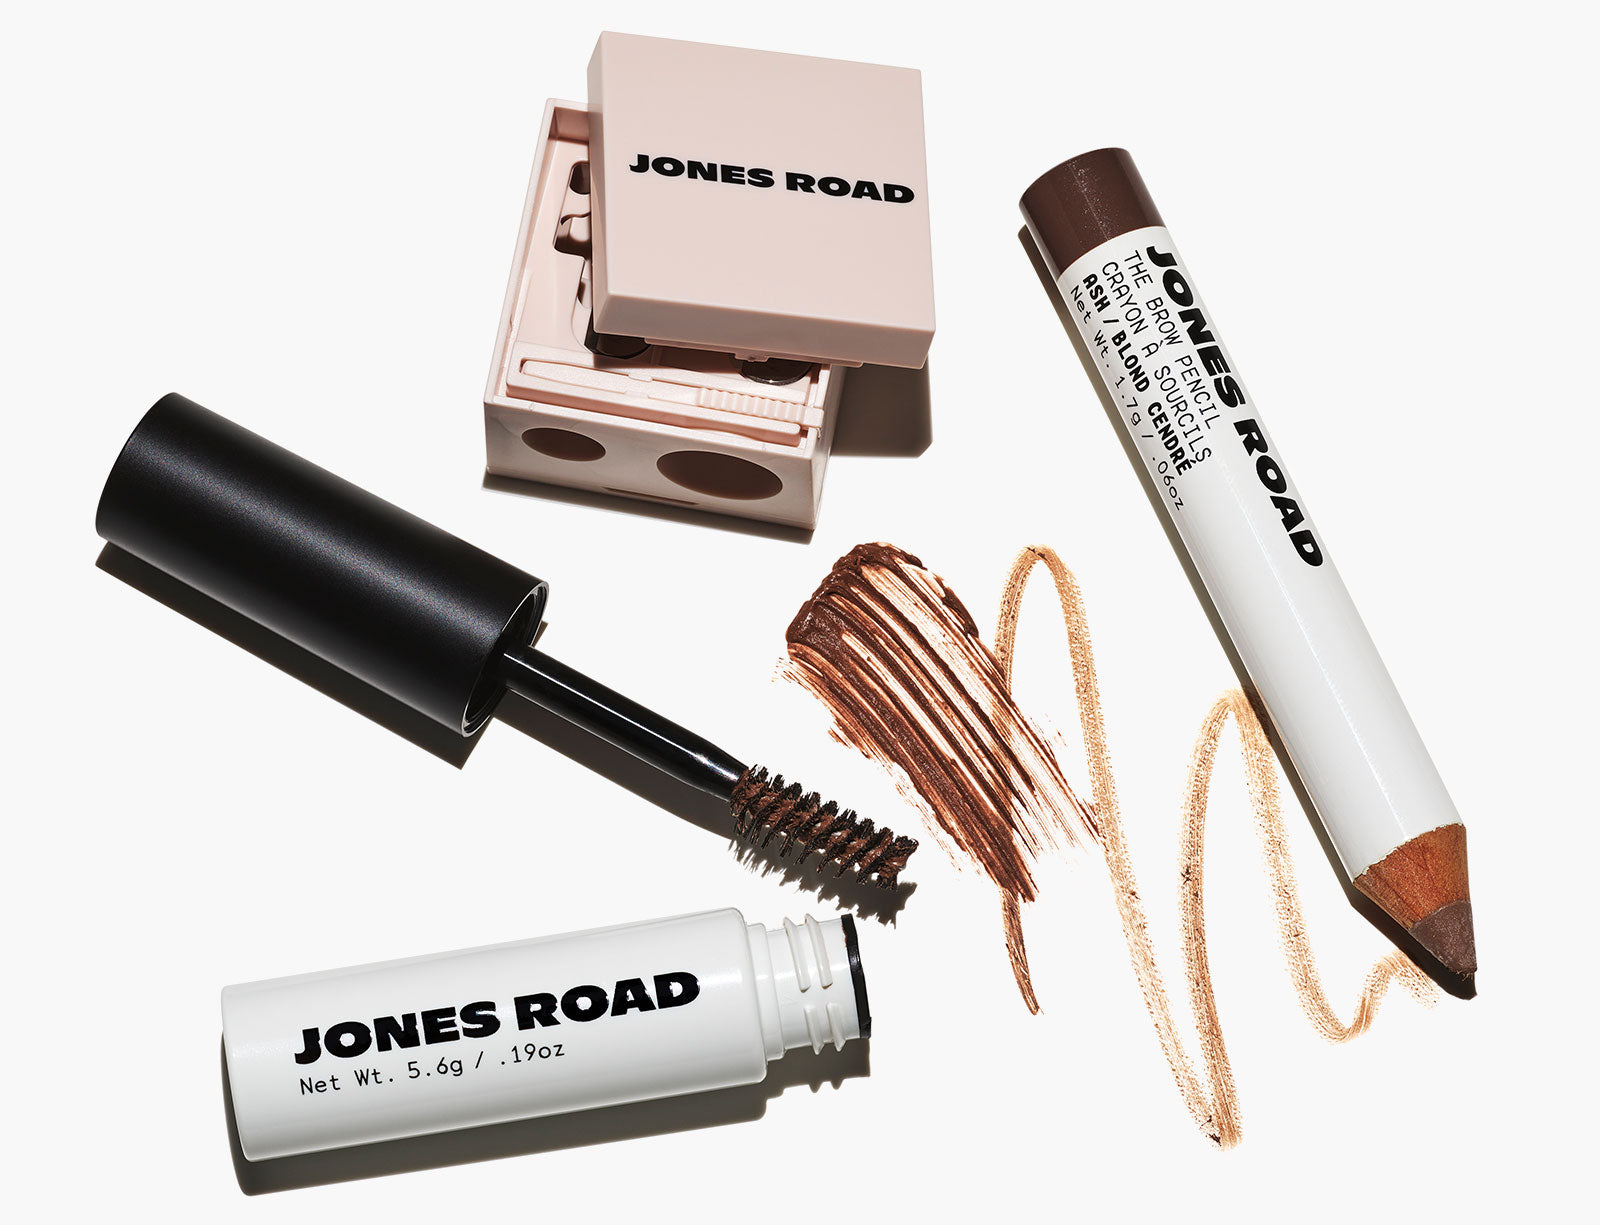 Jones Road Beauty products.